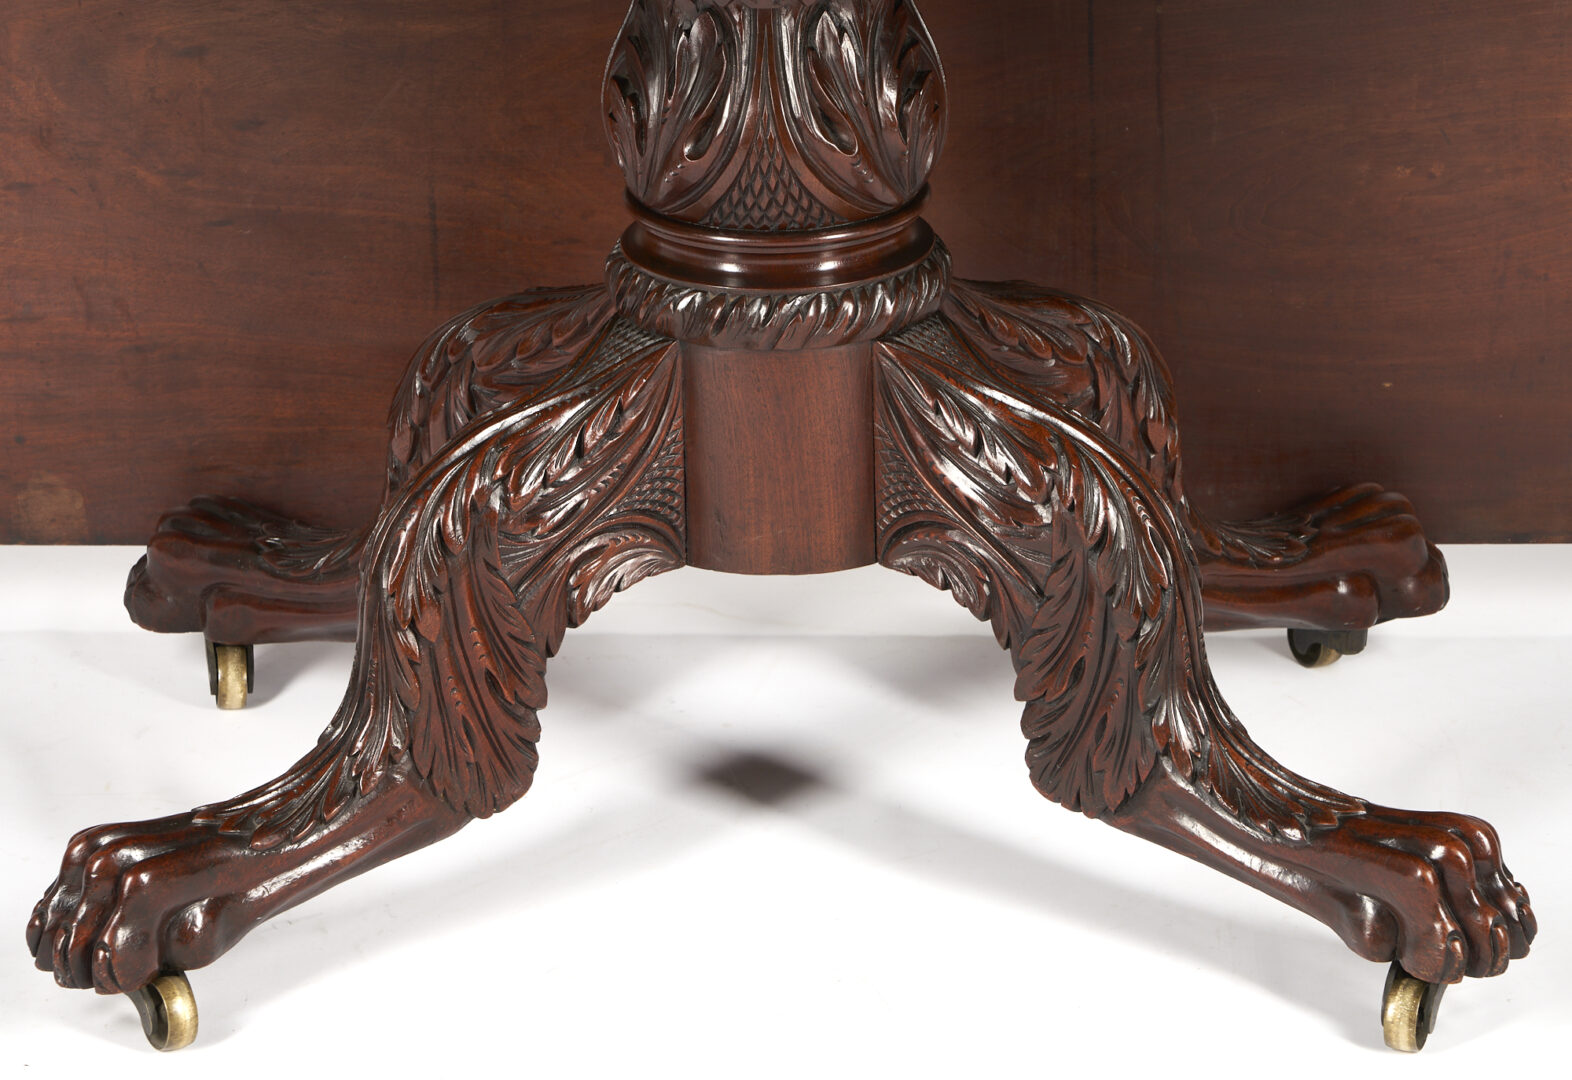 Lot 205: New York Mahogany 3-Pedestal Dining Table, Charleston History